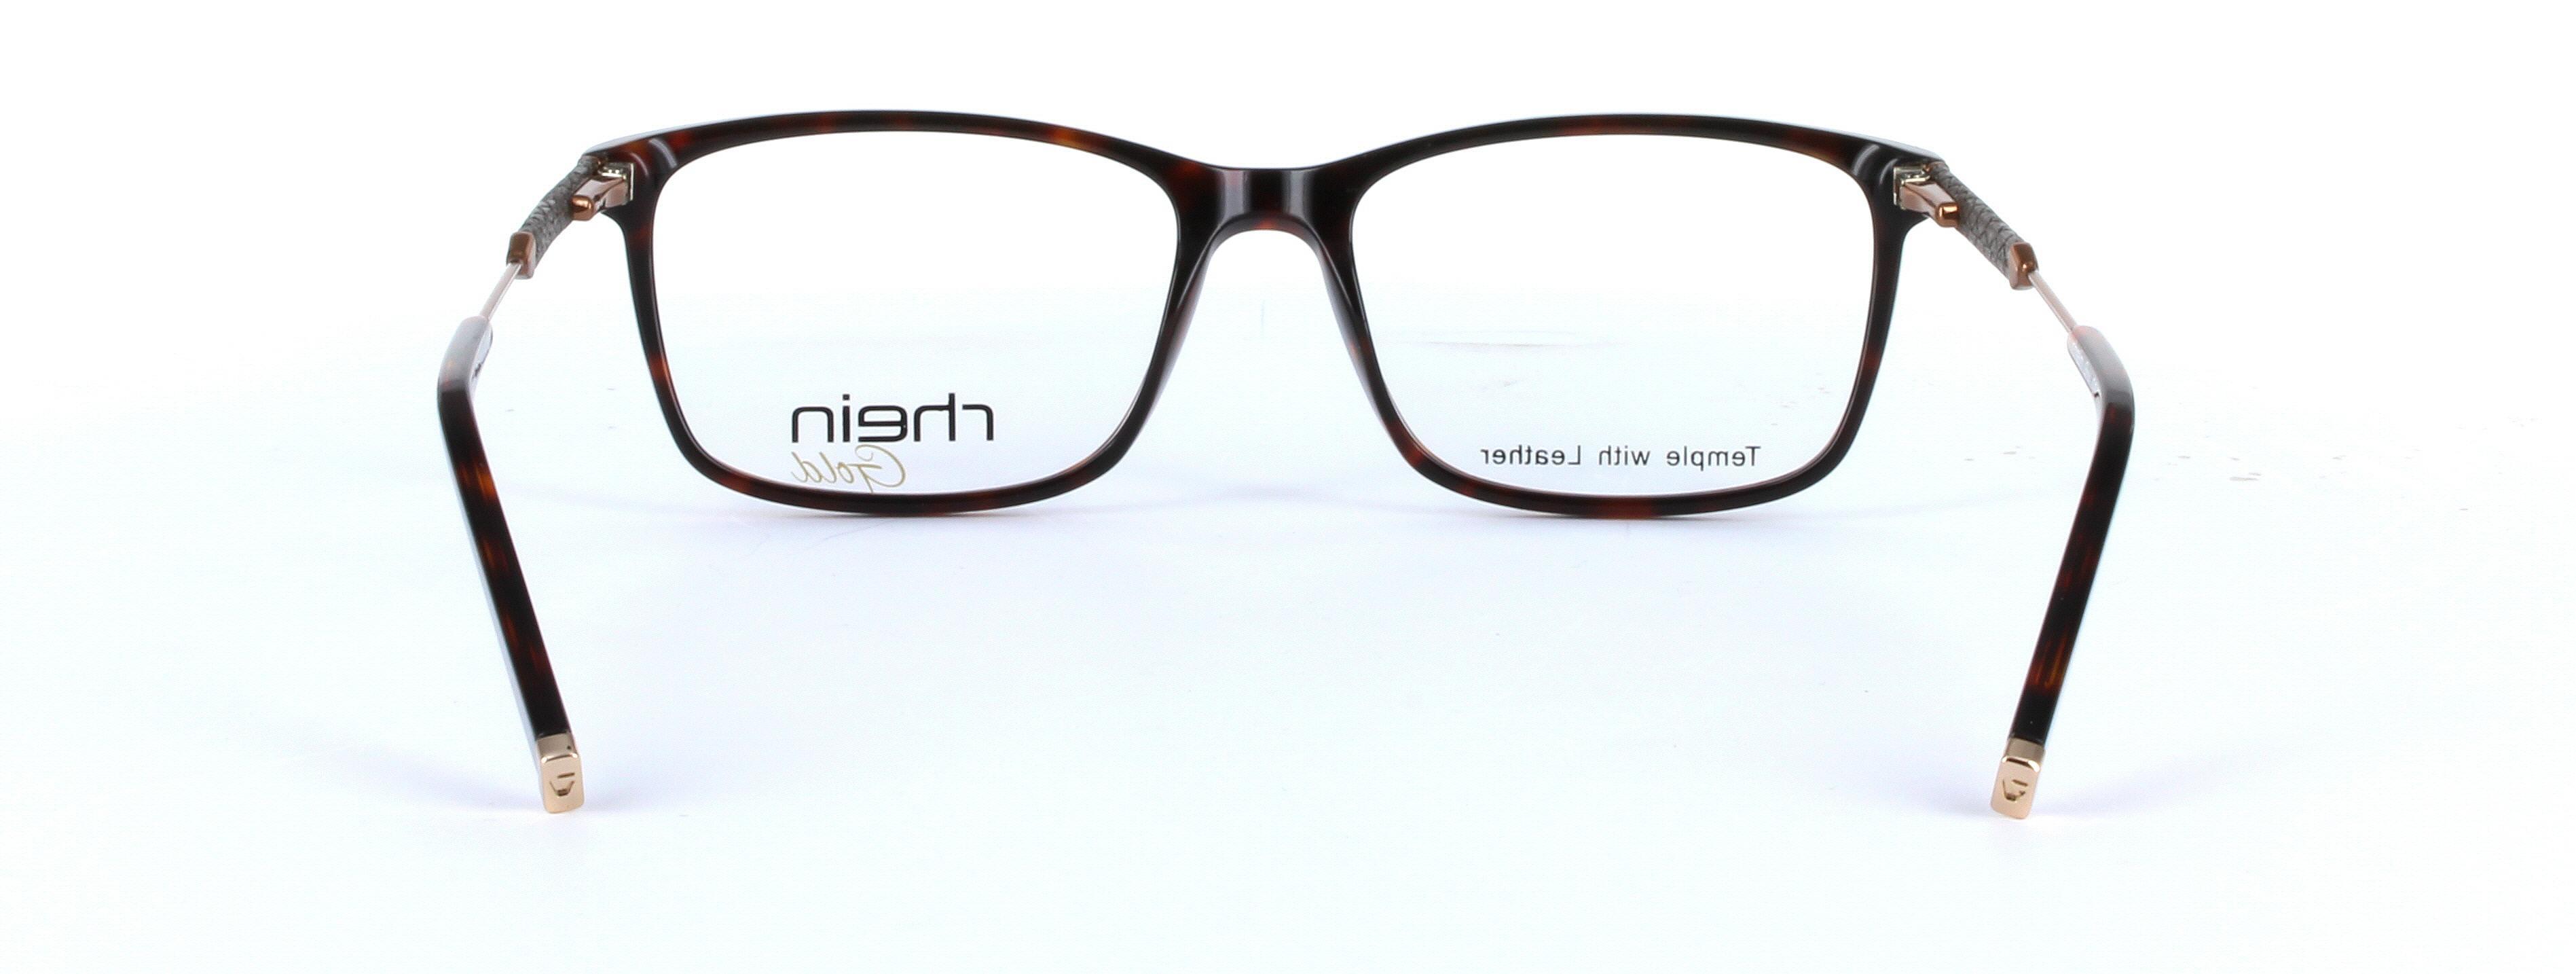 Durham Tortoise Full Rim Oval Rectangular Plastic Glasses - Image View 3